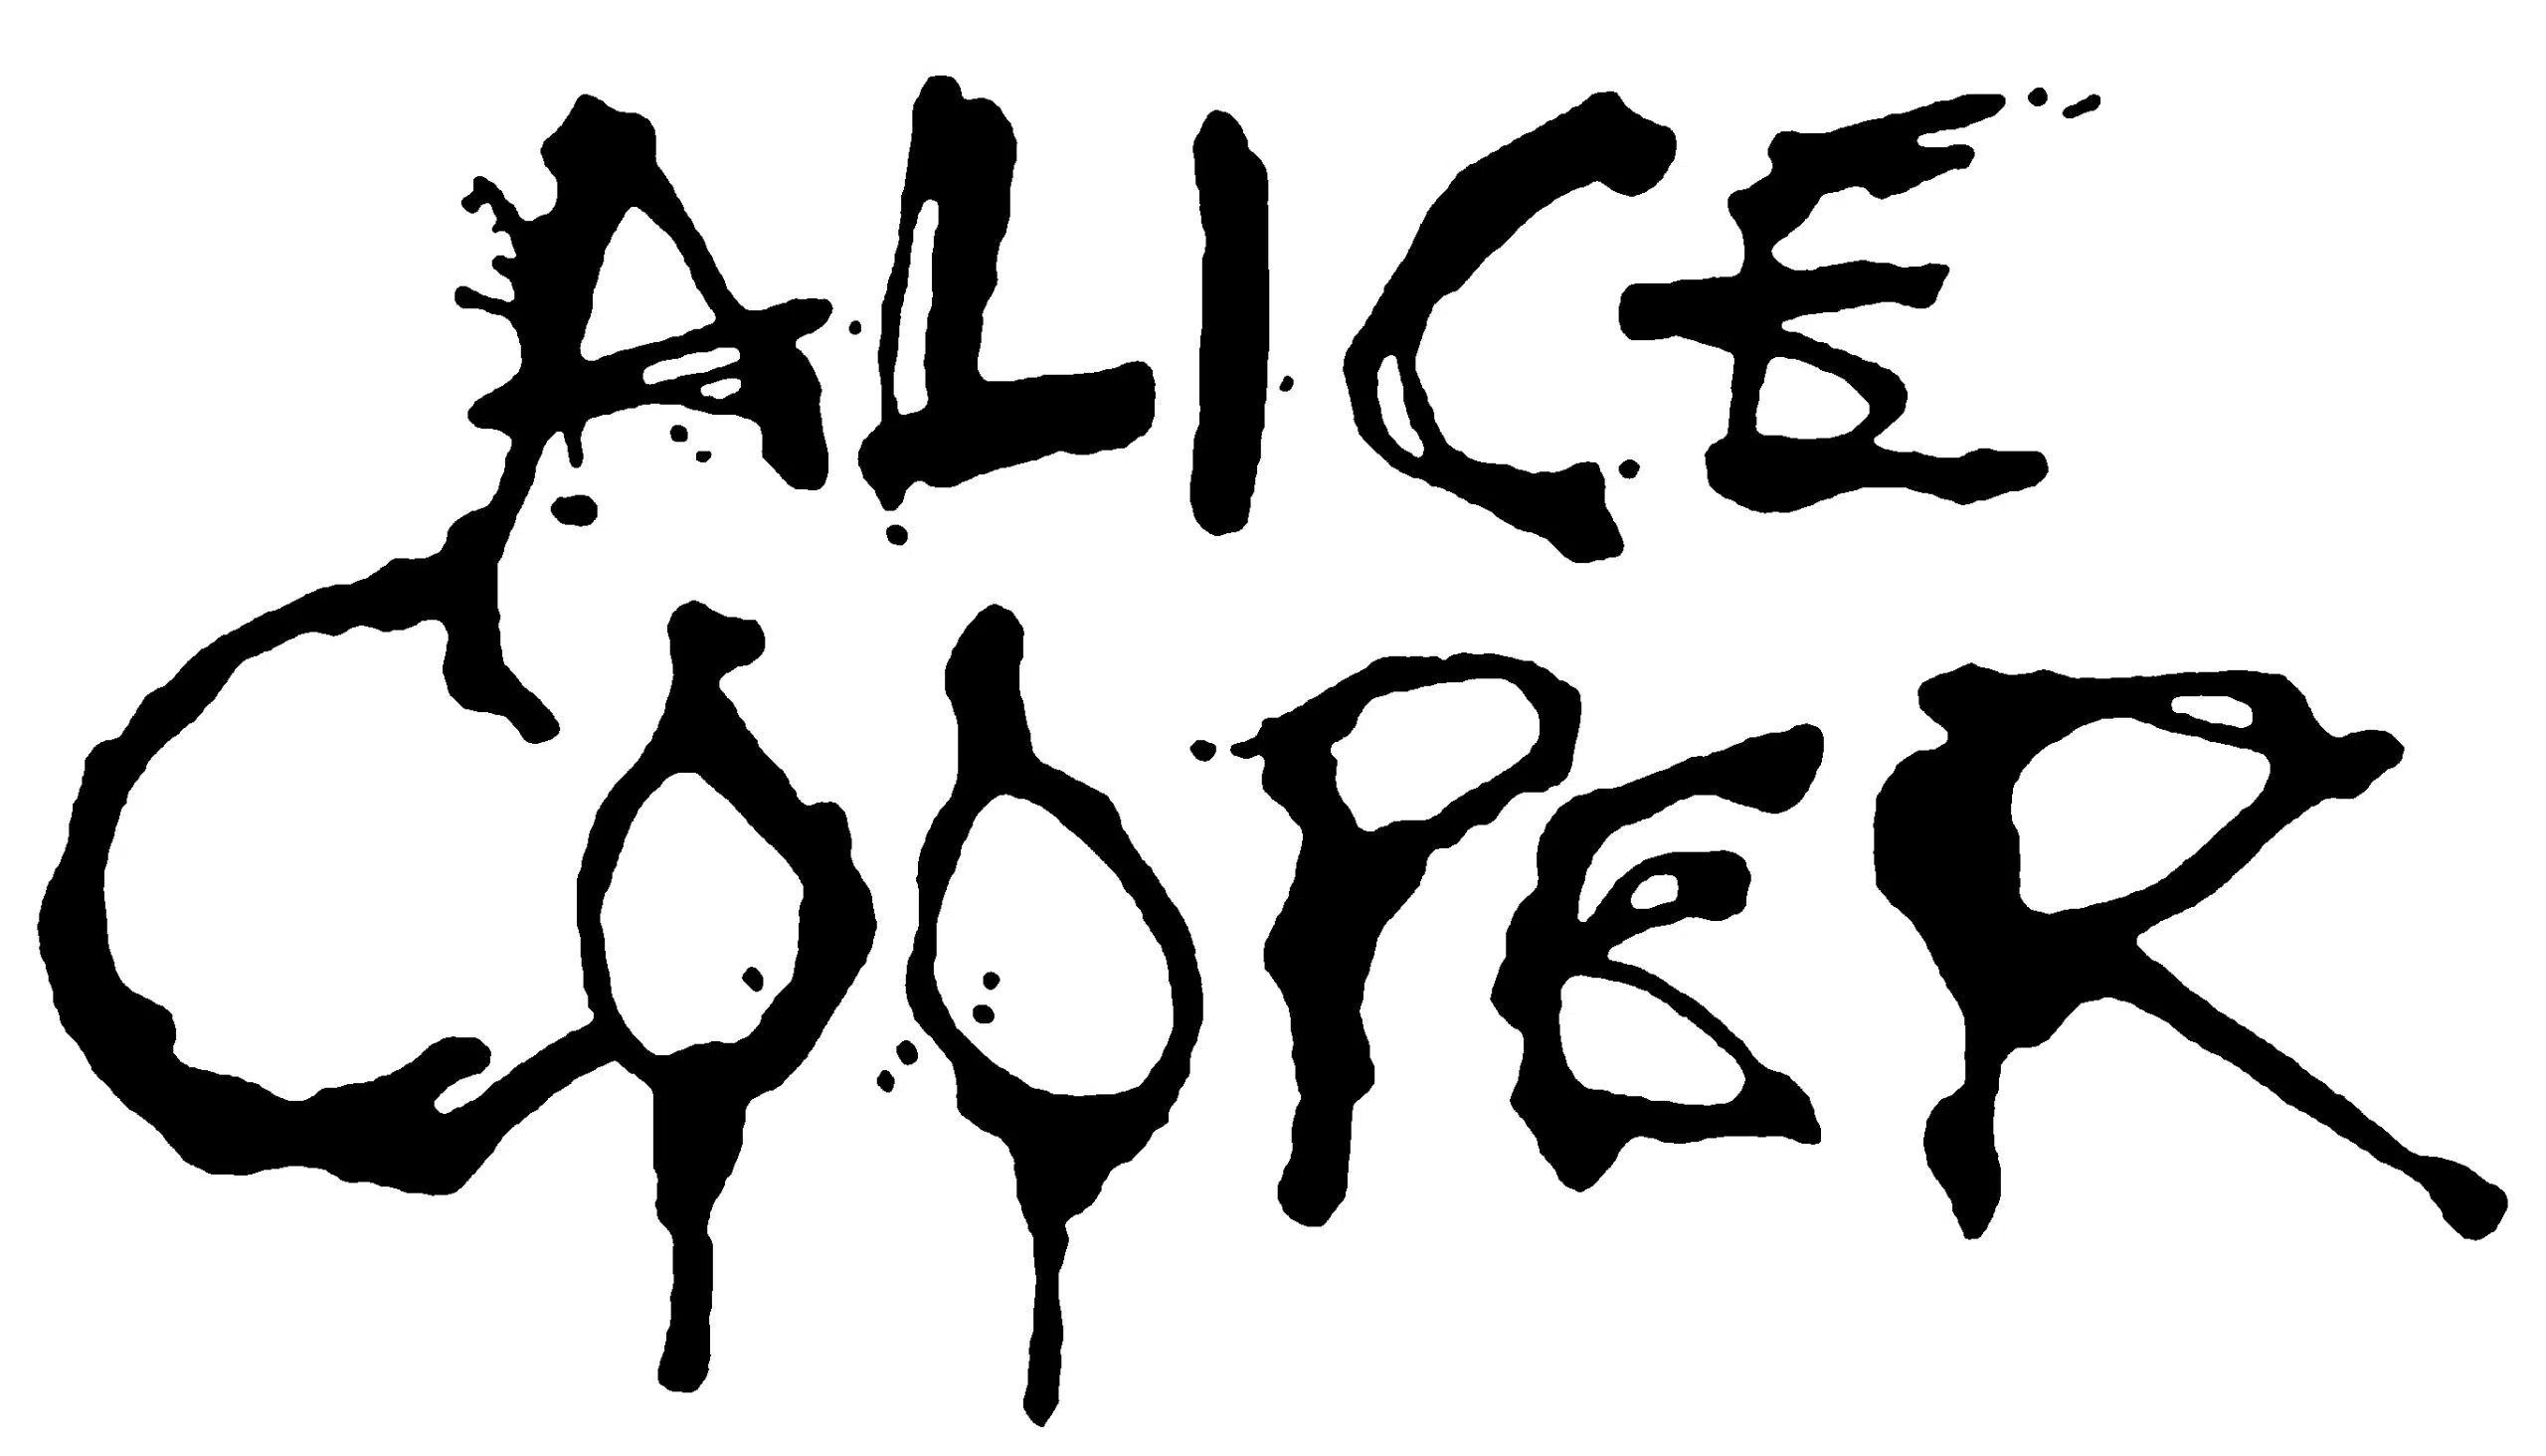 Preorder Alice Cooper's New Album, PARANORMAL!